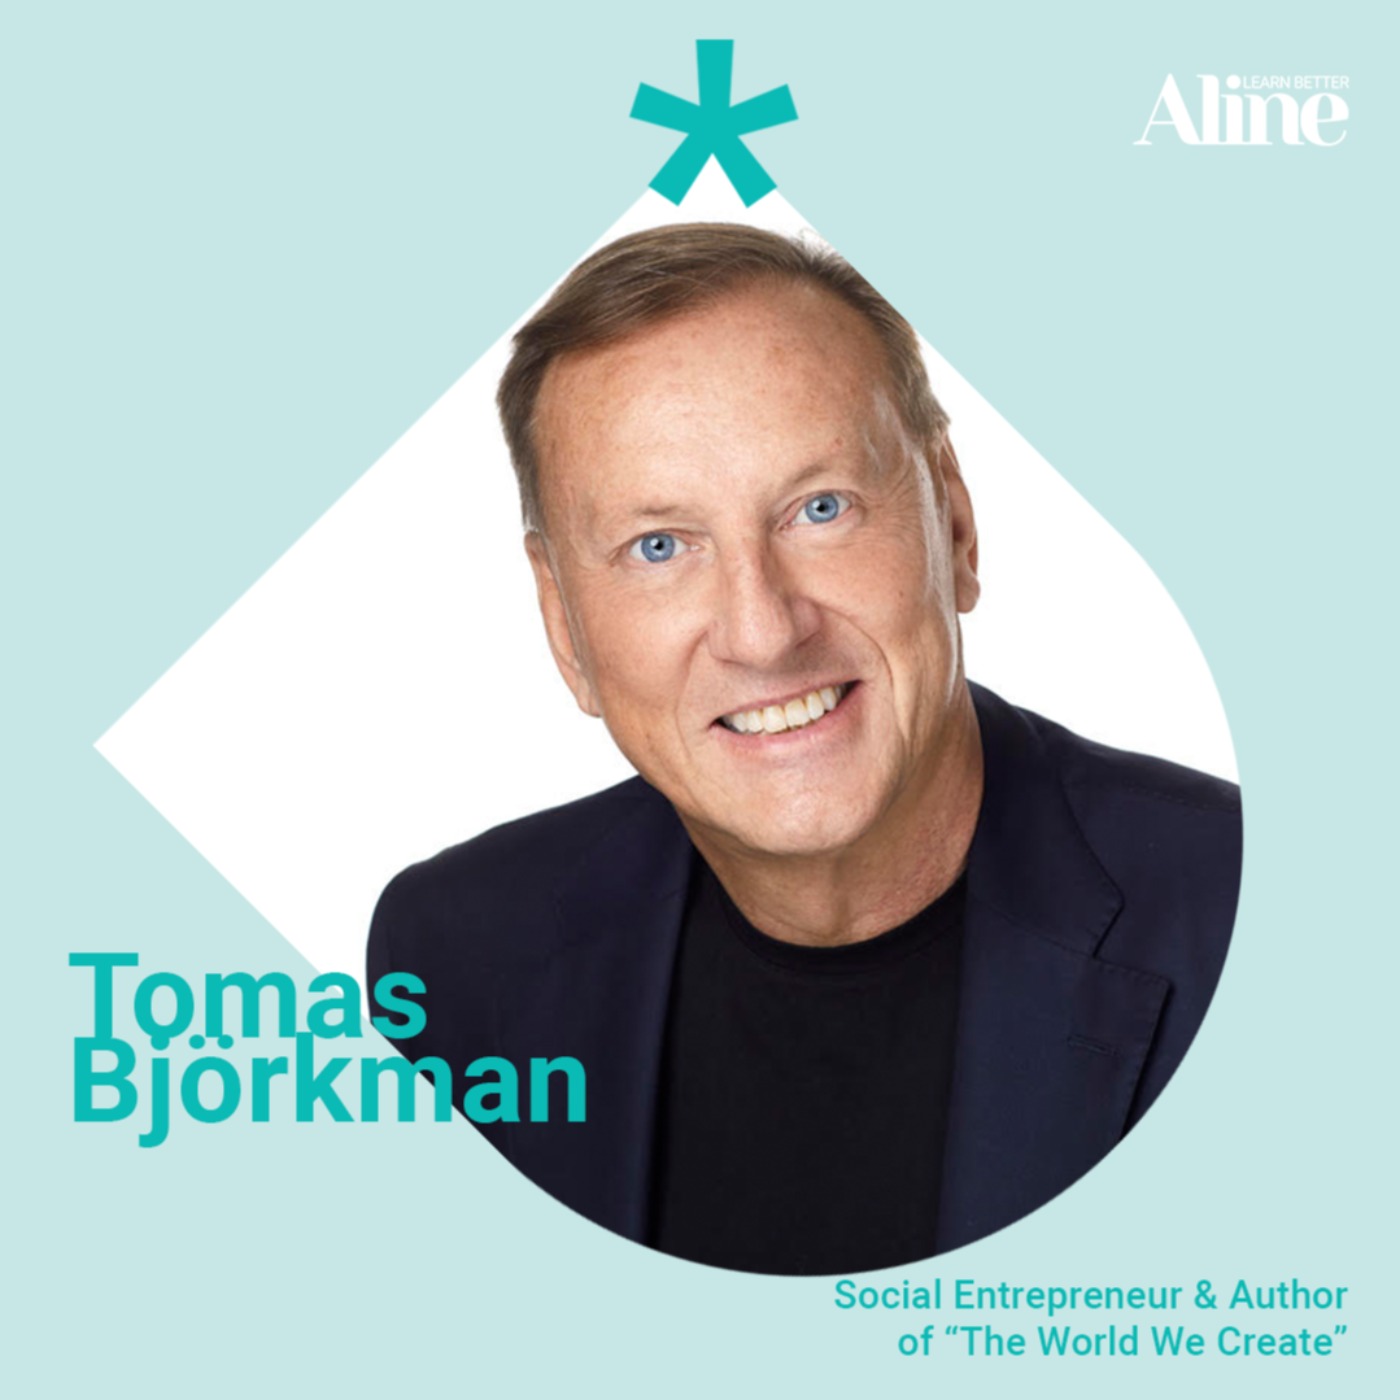 Tomas Björkman: The World We Create